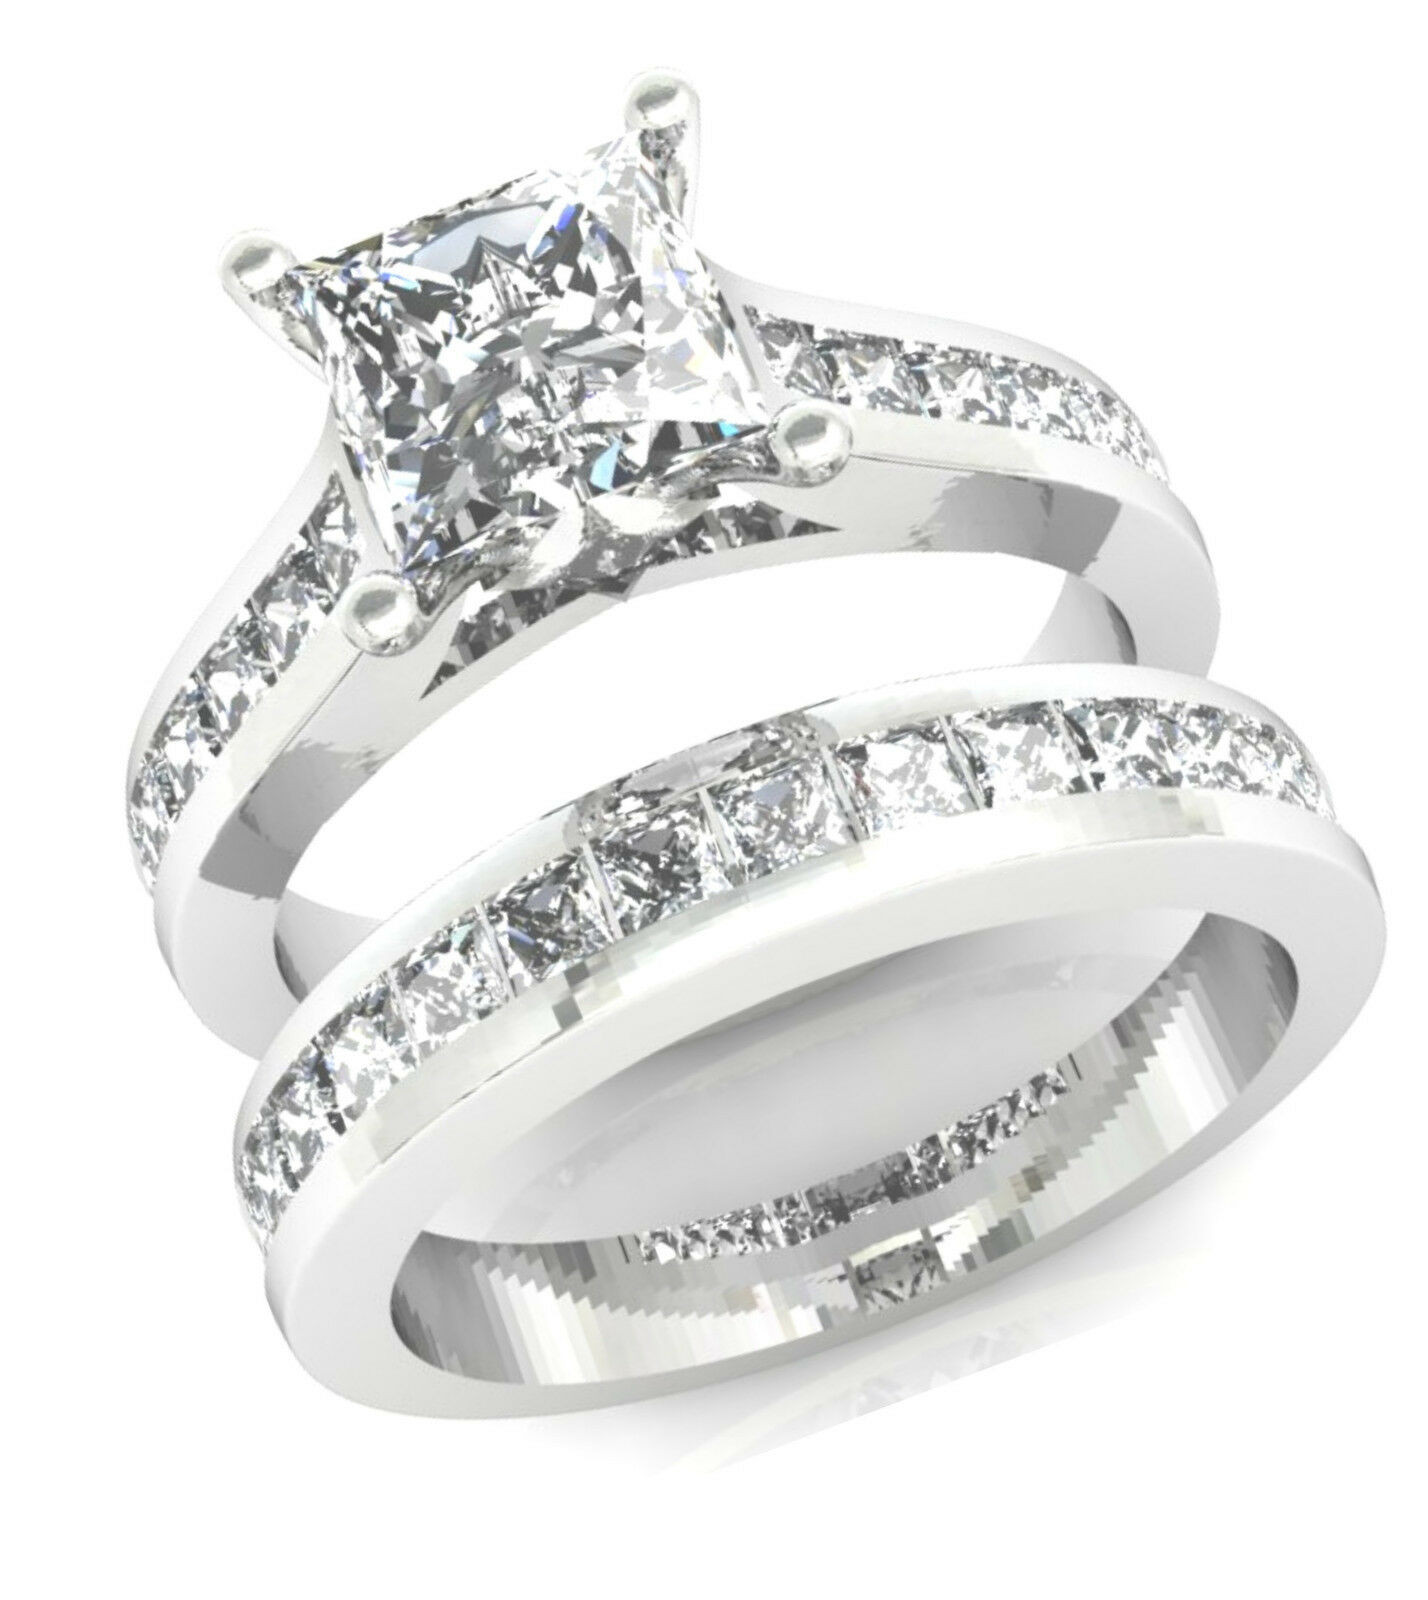 Princess Cut Rings Engagement
 3 2CT PRINCESS CUT CHANNEL SET ENGAGEMENT RING WEDDING